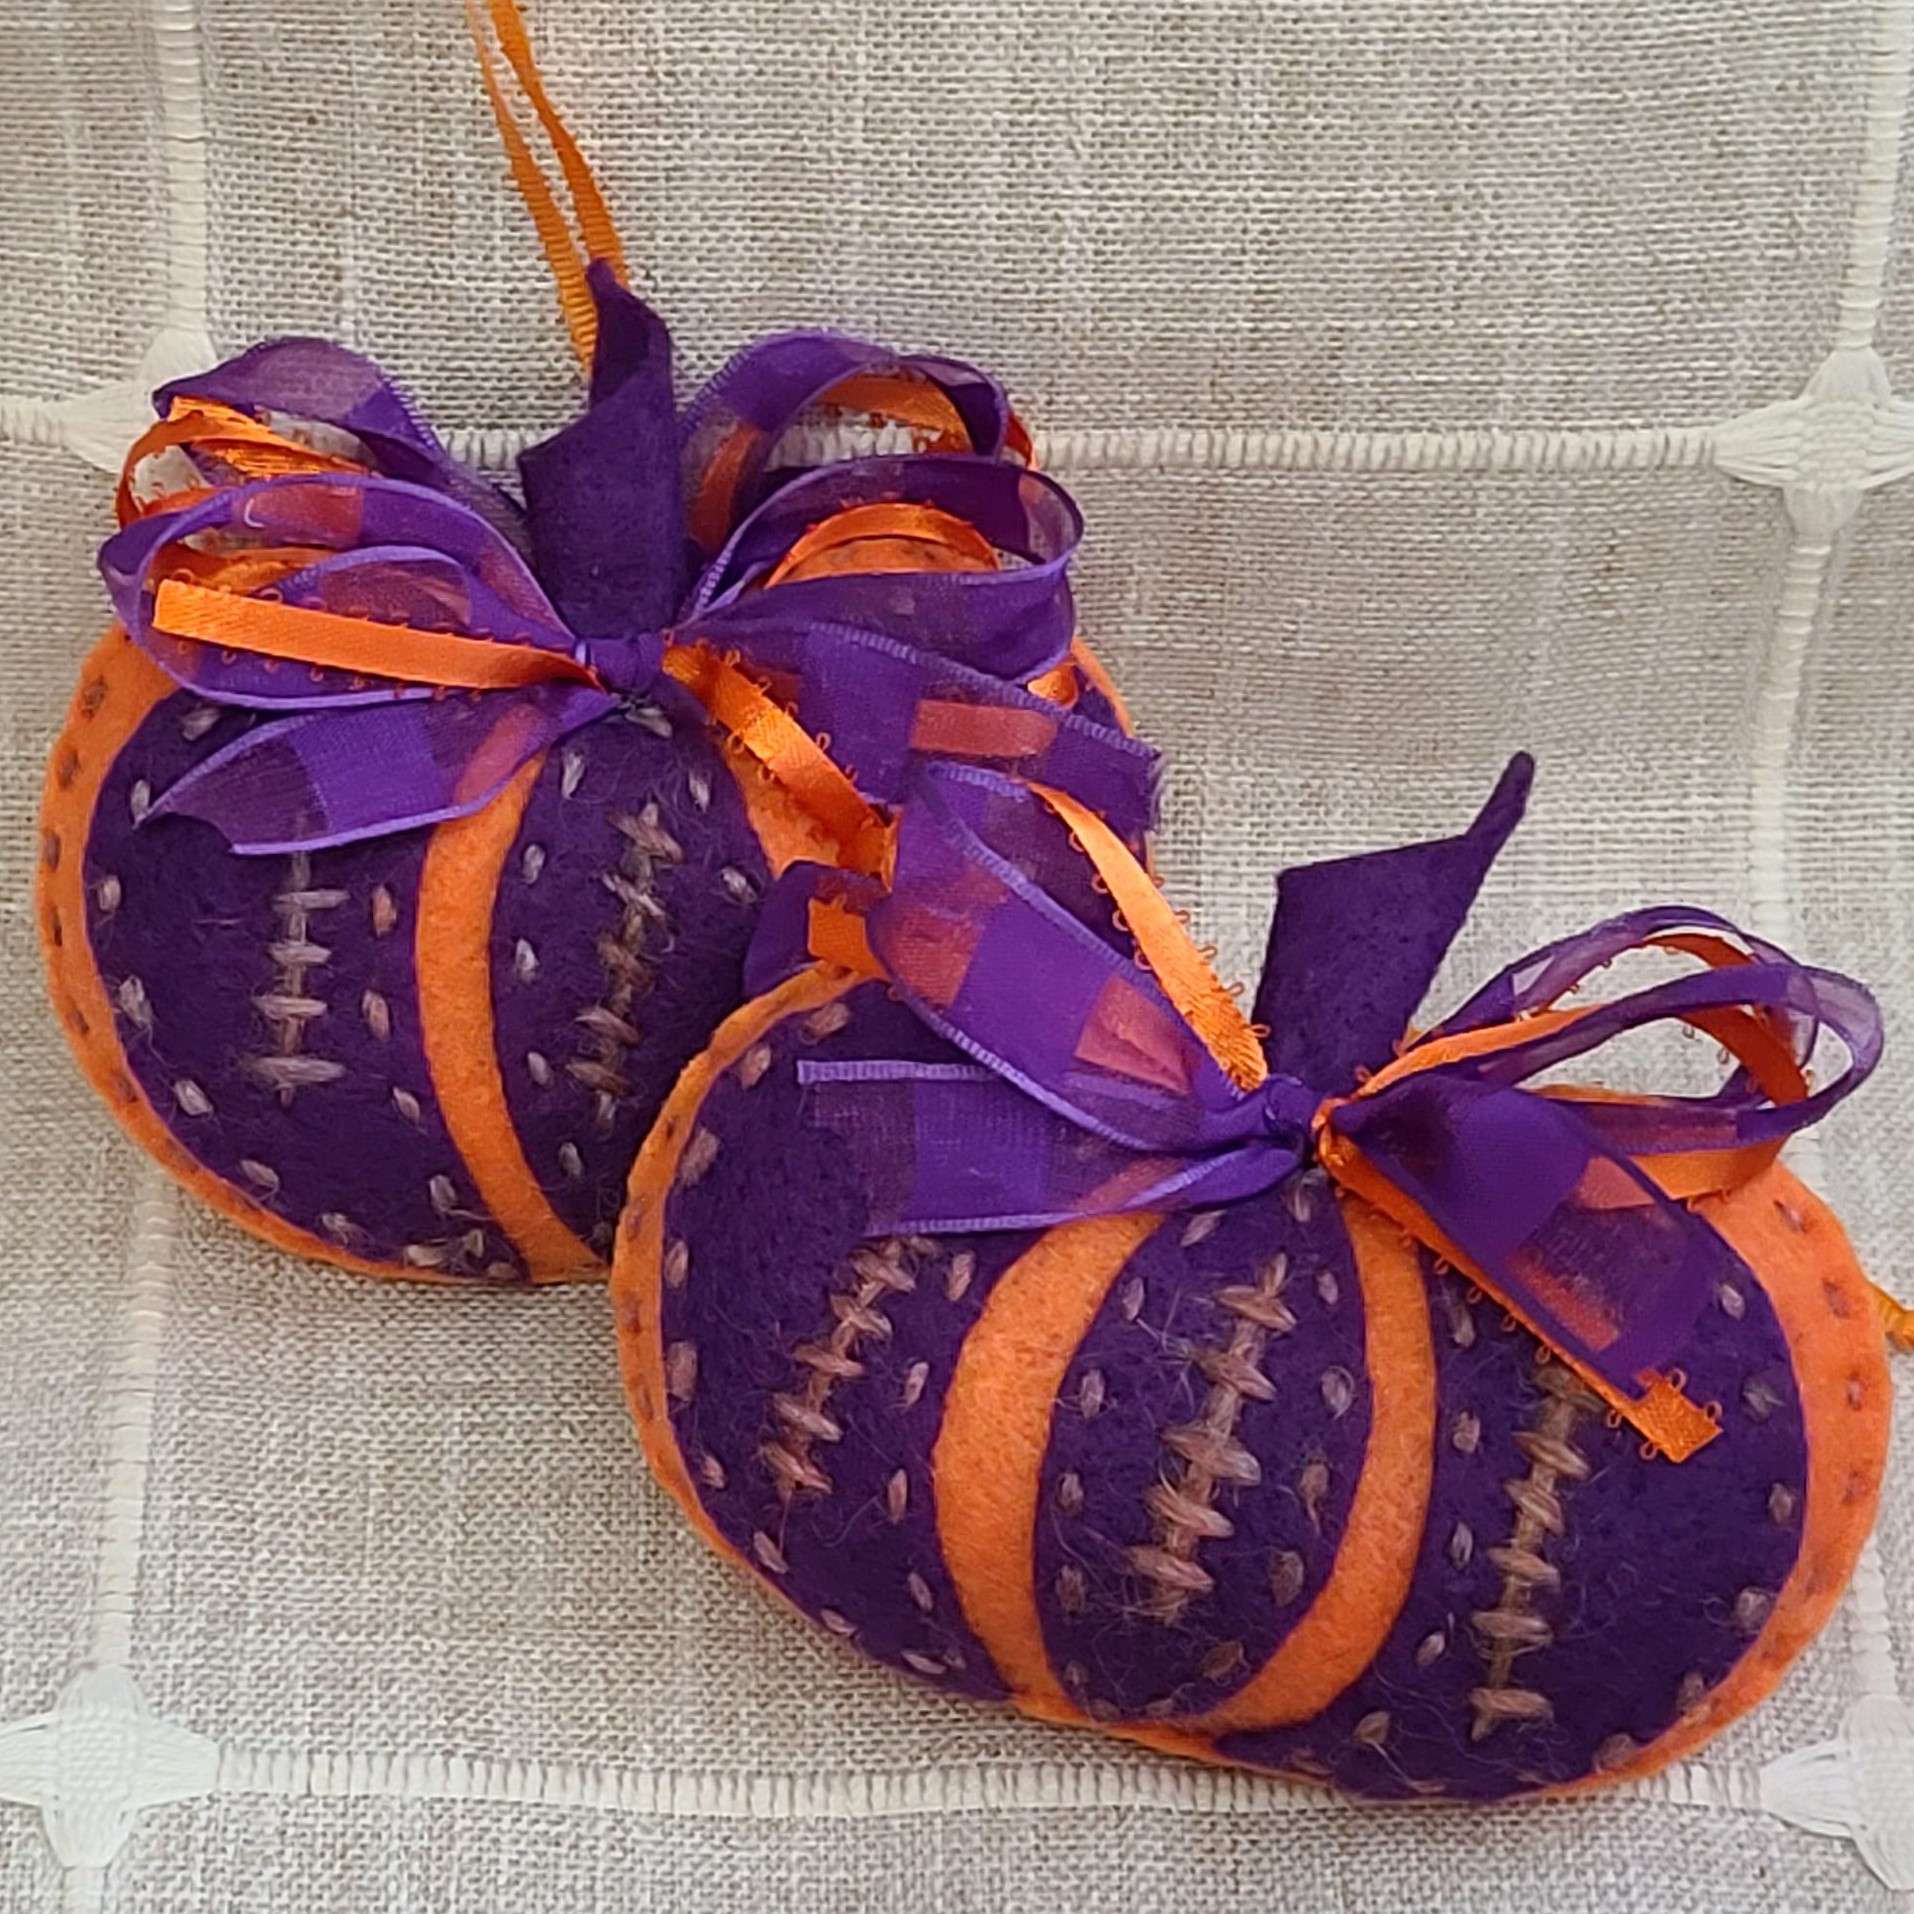 Felt pumpkin ornament - orange and purple